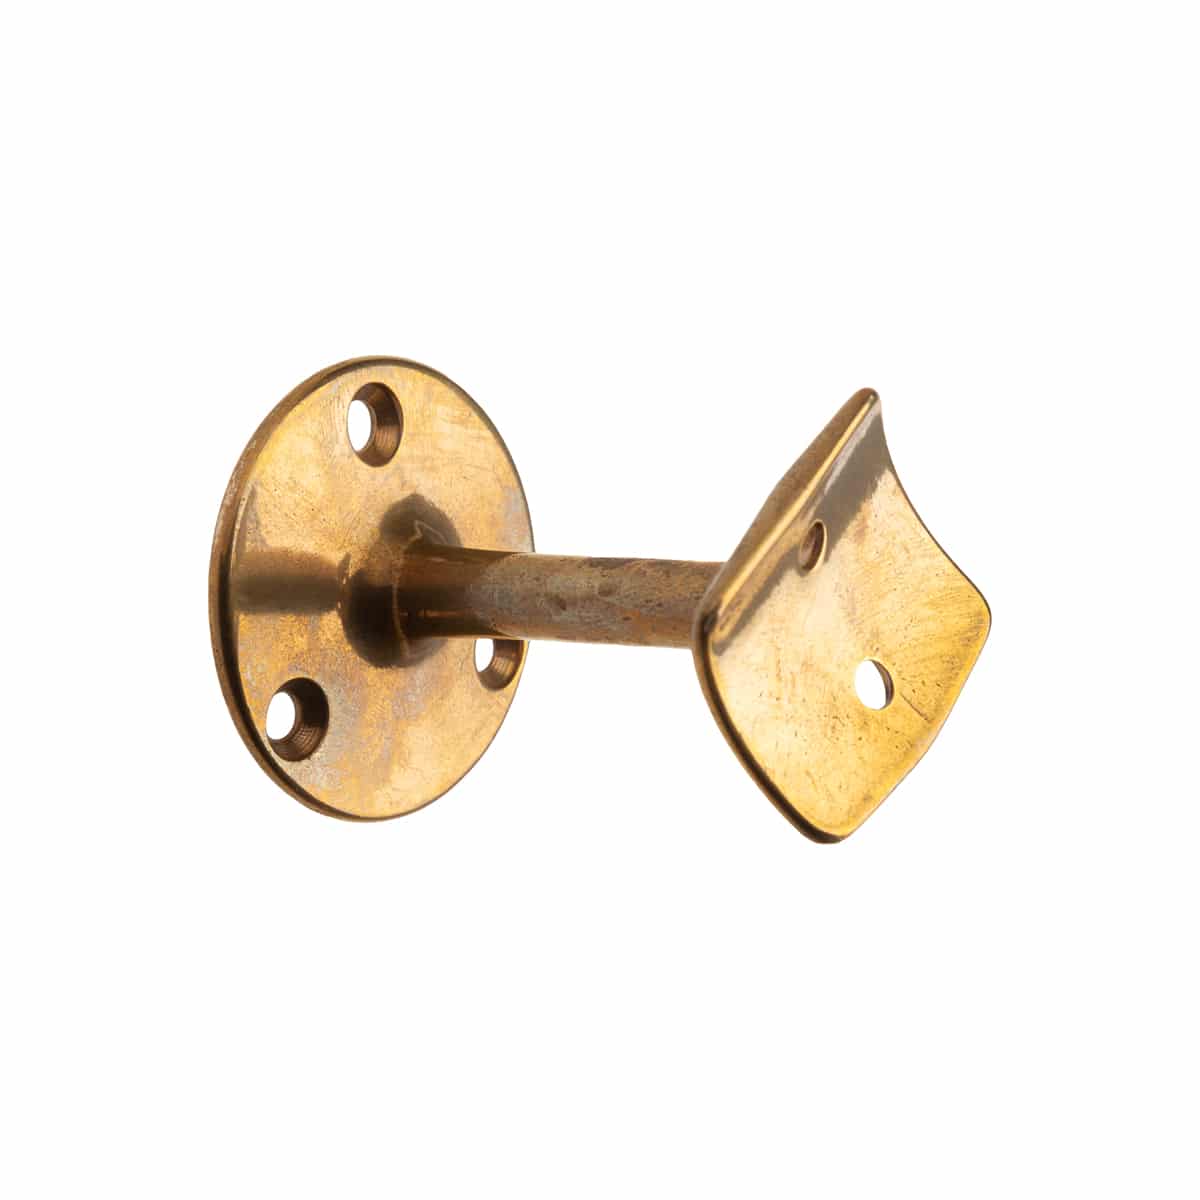 Straight Handrail Bracket Brass